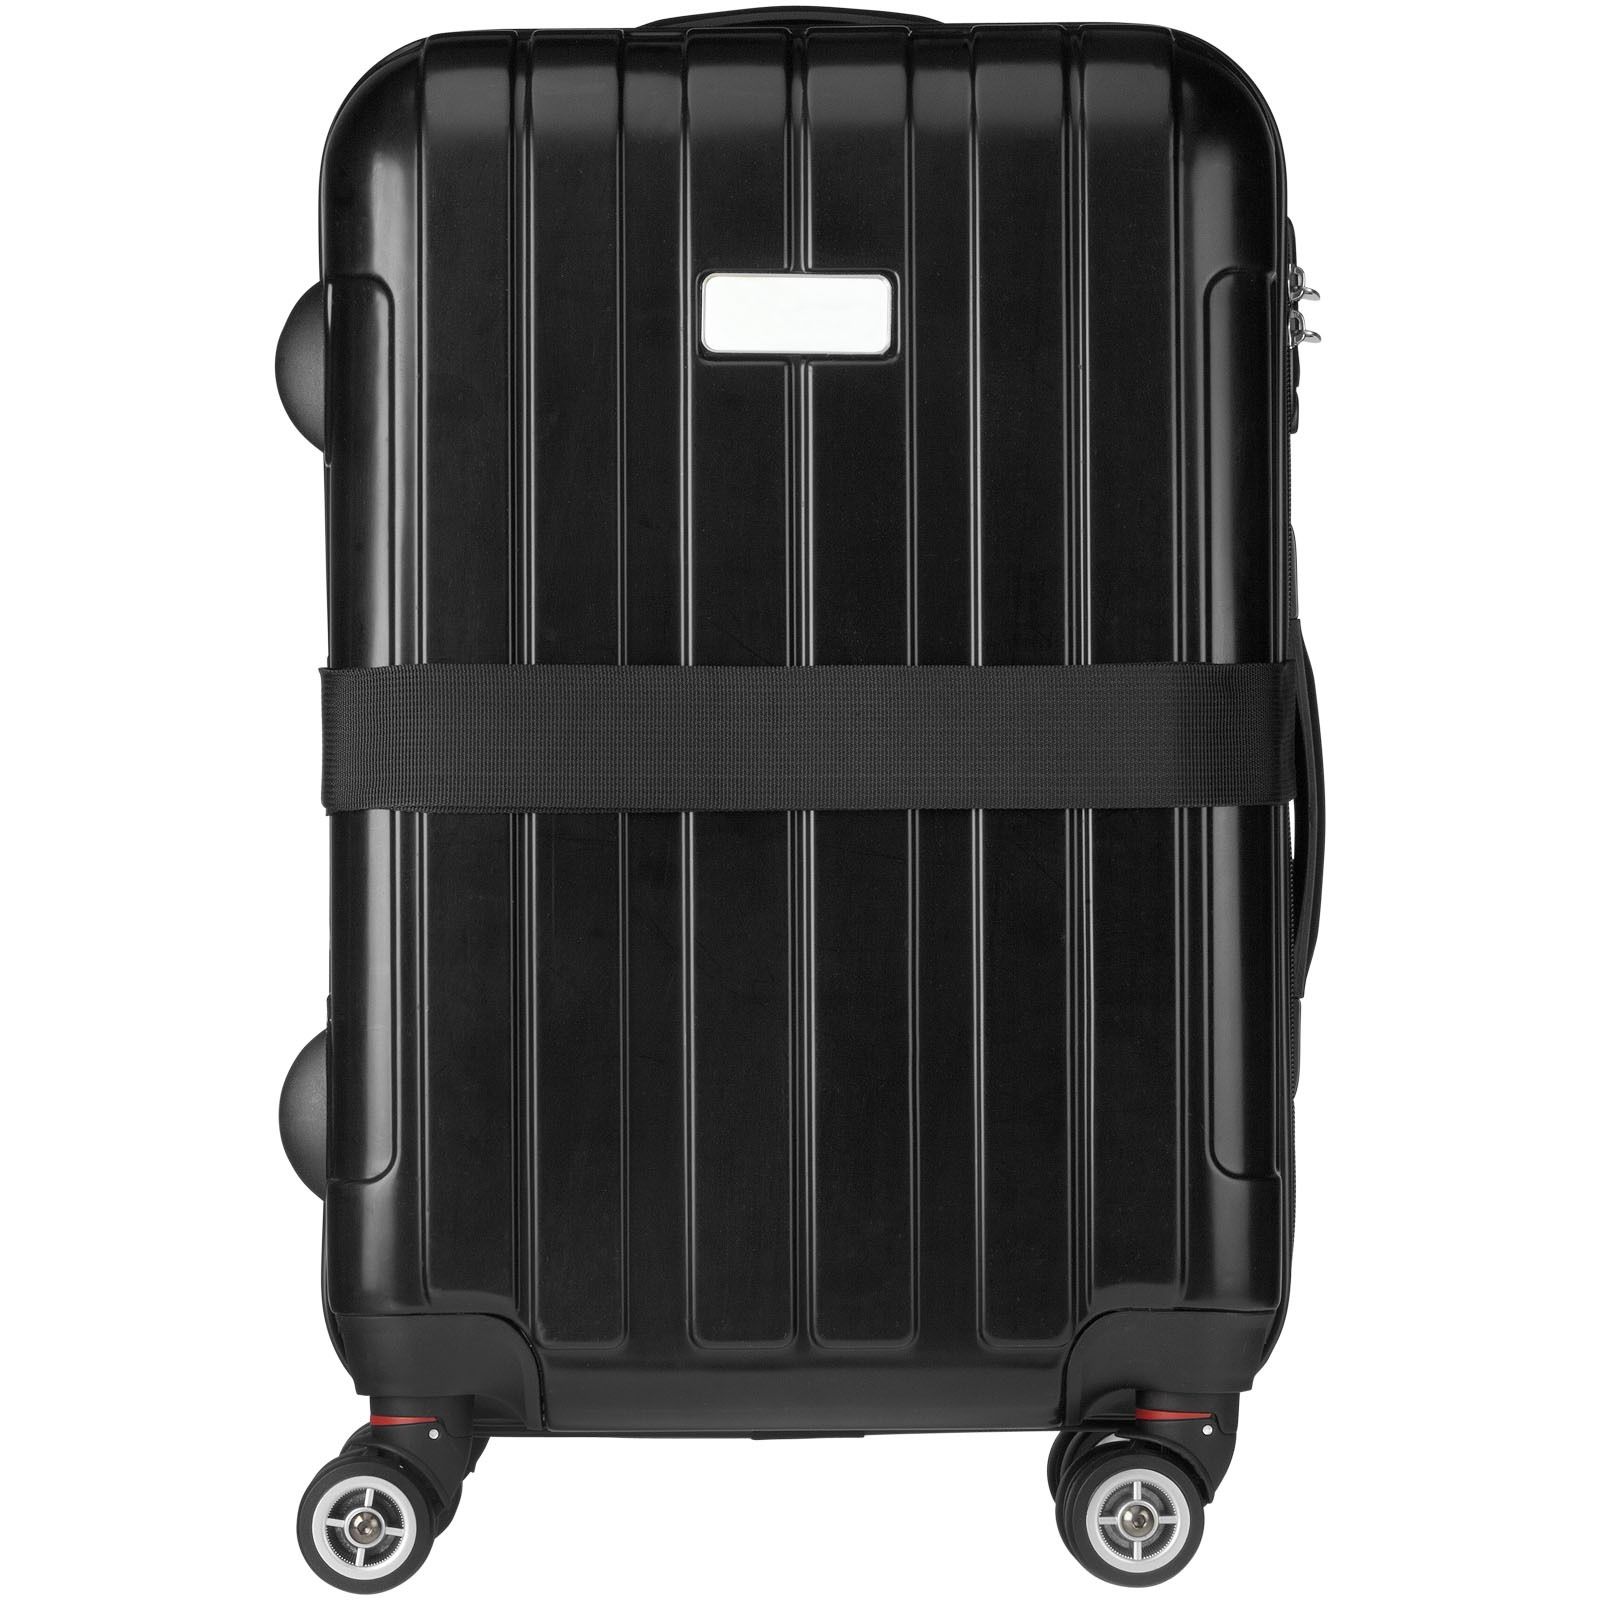 Saul suitcase strap - JSM Brand Exposure